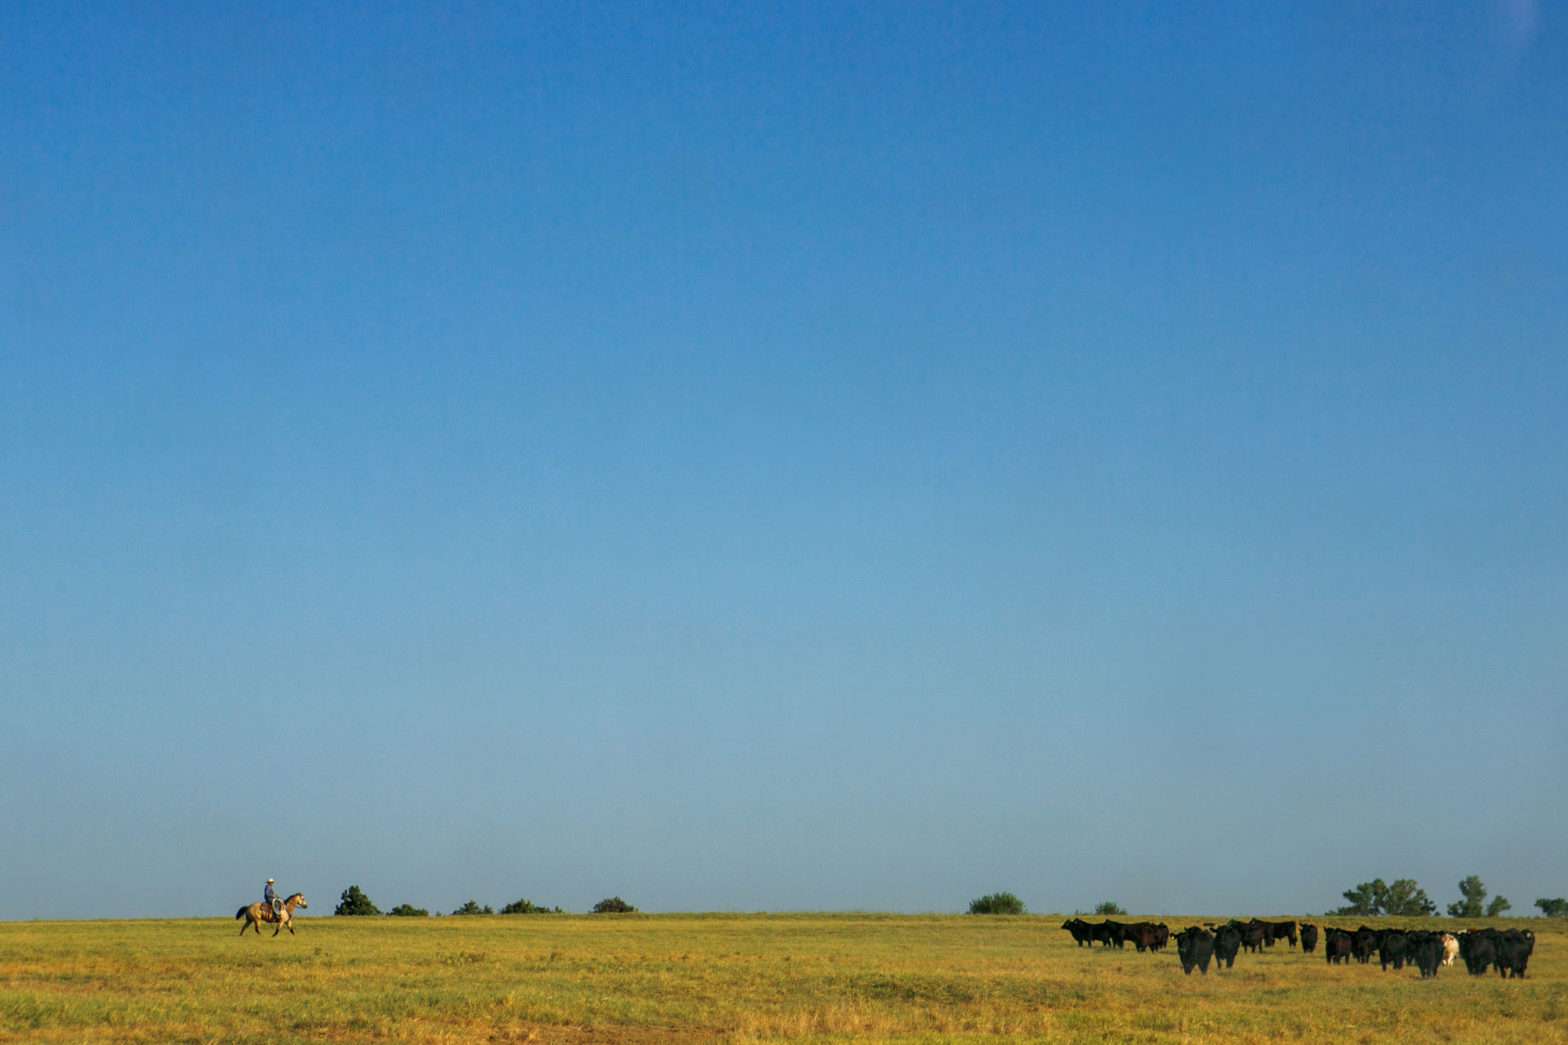 Rancher rides on horseback across pasture toward herd of cattle